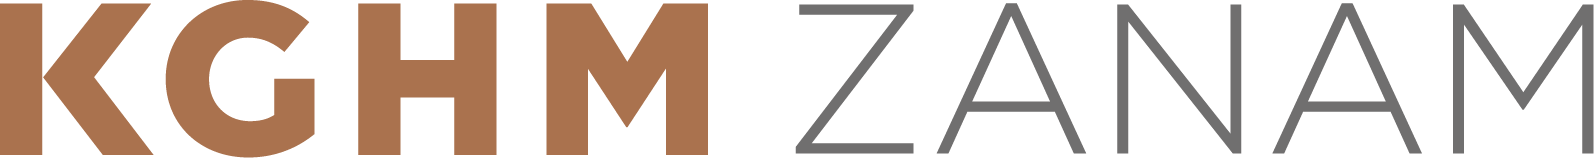 logo KGHM ZANAM